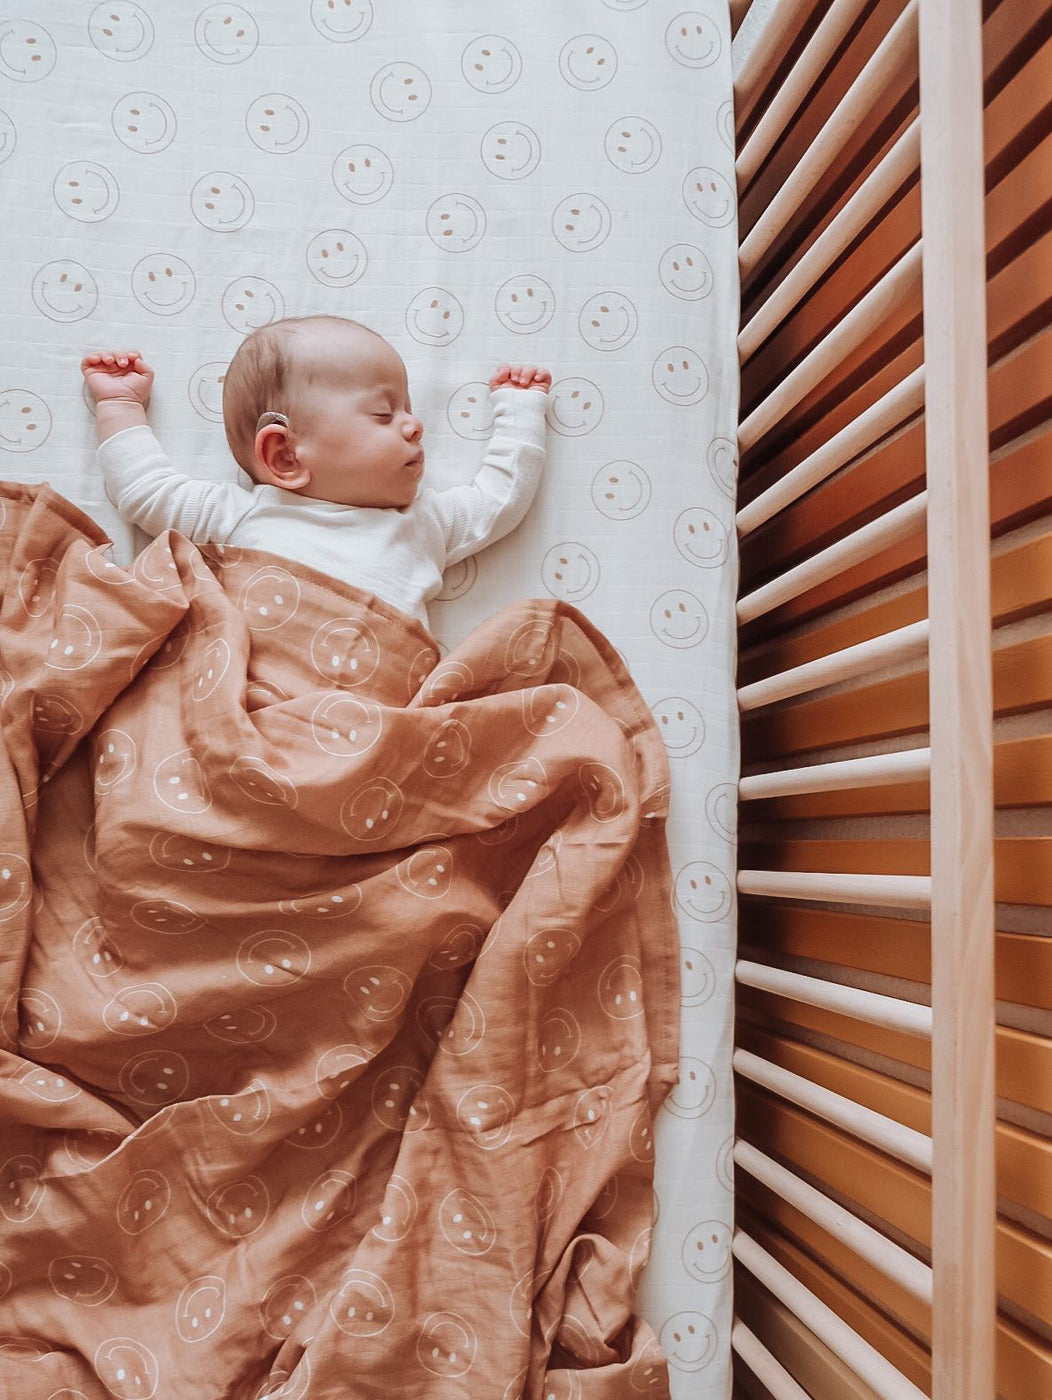 a baby sleeping in a crib